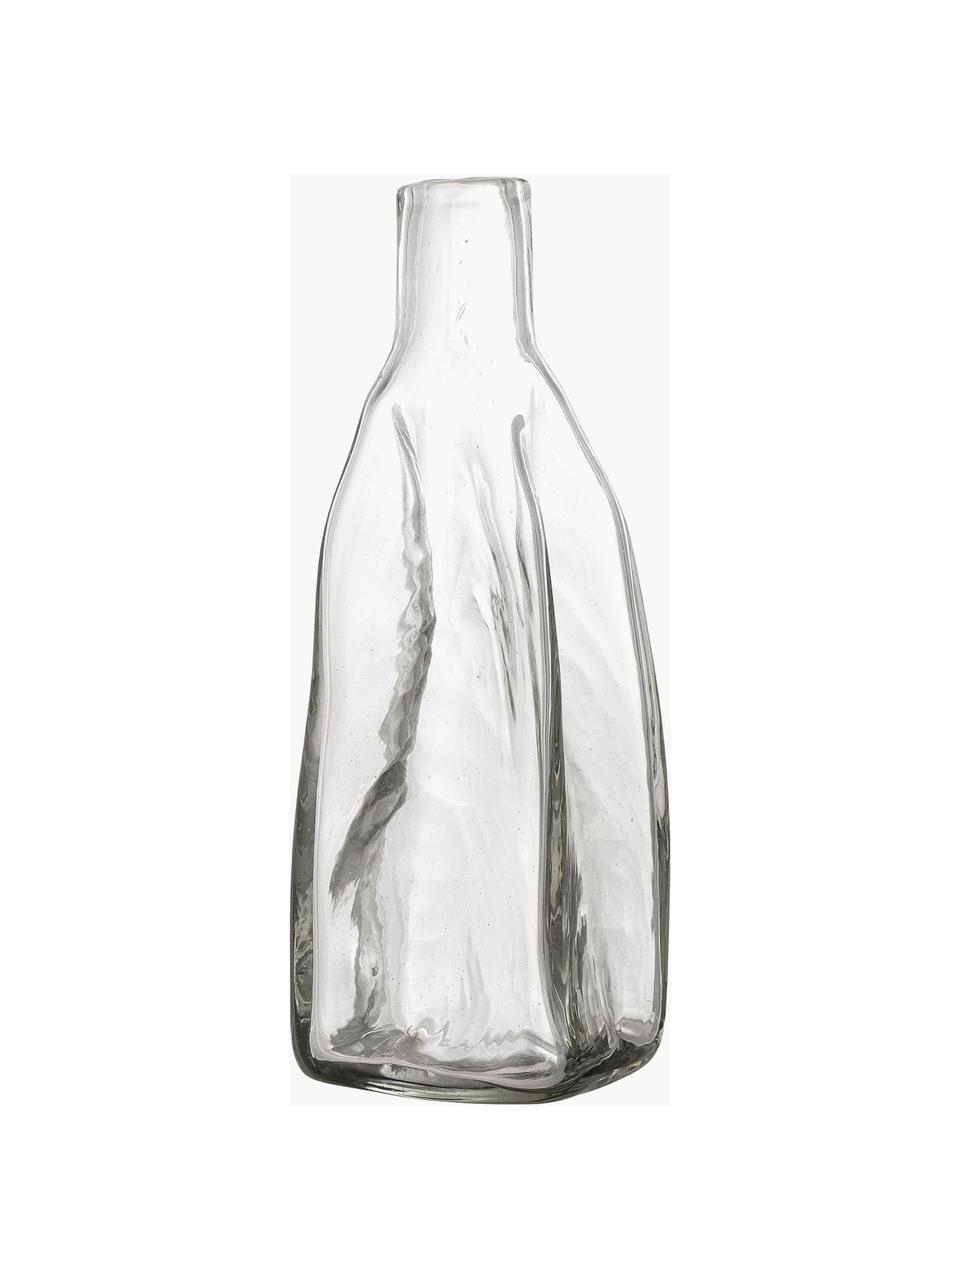 Mundgeblasene Wasserkaraffe Lenka in organischer Form, 500 ml, Glas, Transparent, 500 ml